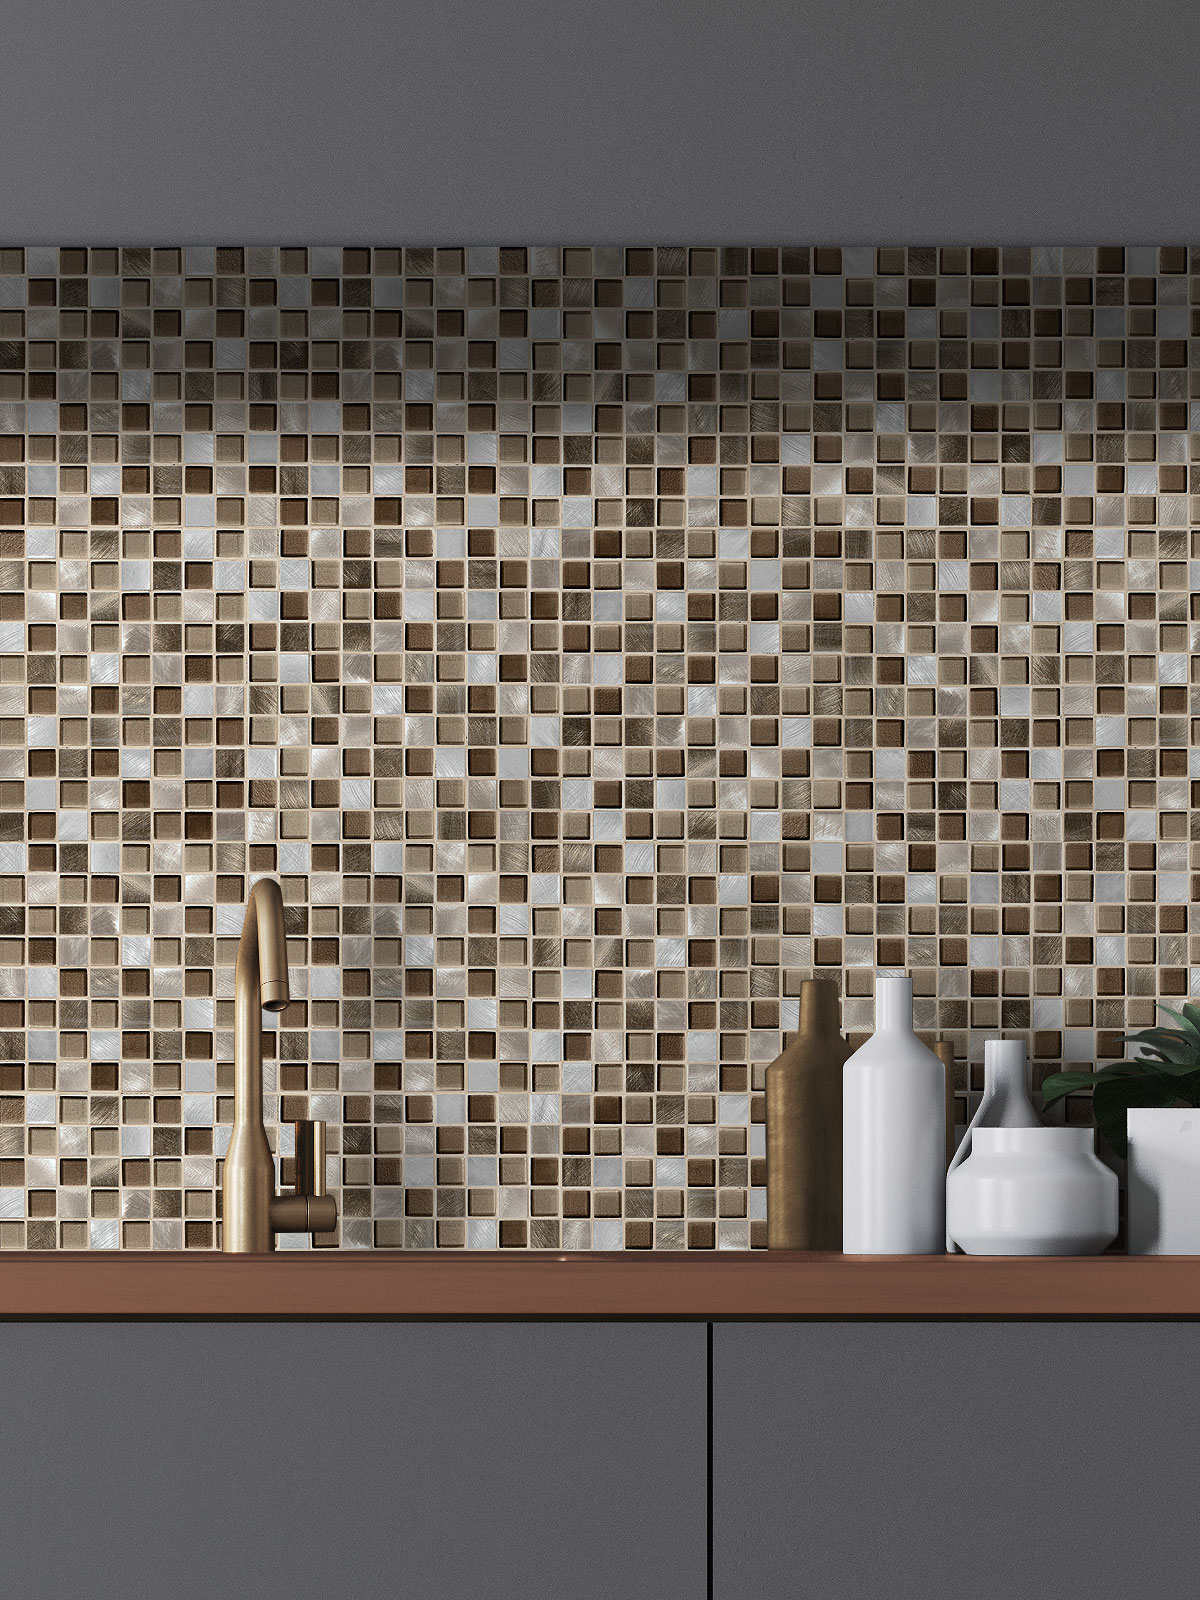 BA1123-brown metal glass modern kitchen backsplash tile